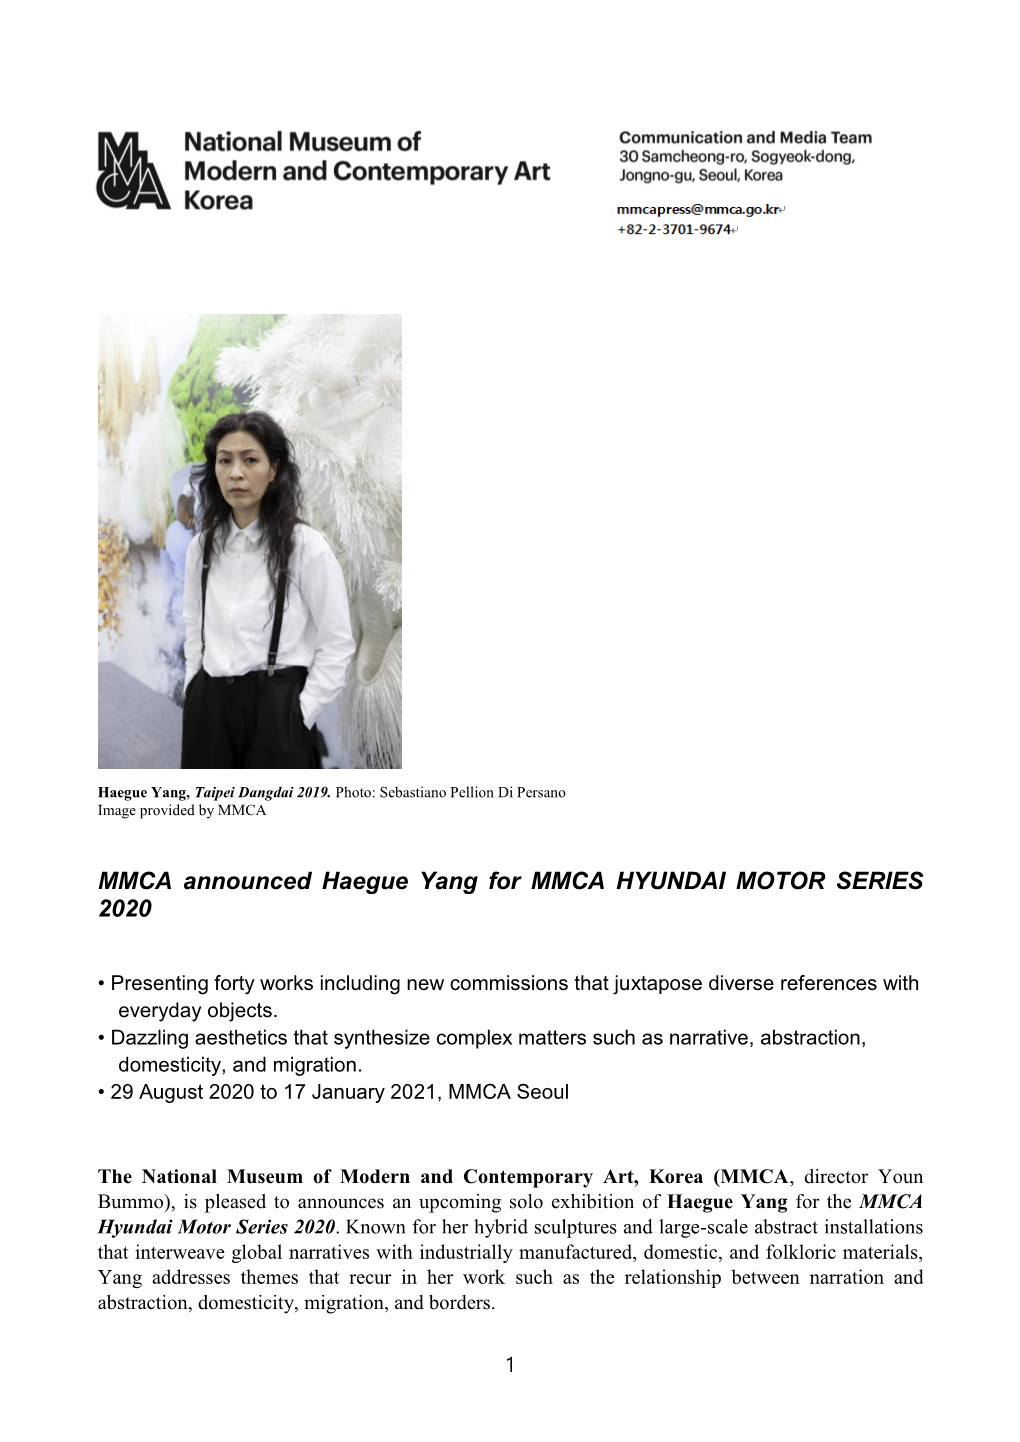 MMCA Announced Haegue Yang for MMCA HYUNDAI MOTOR SERIES 2020